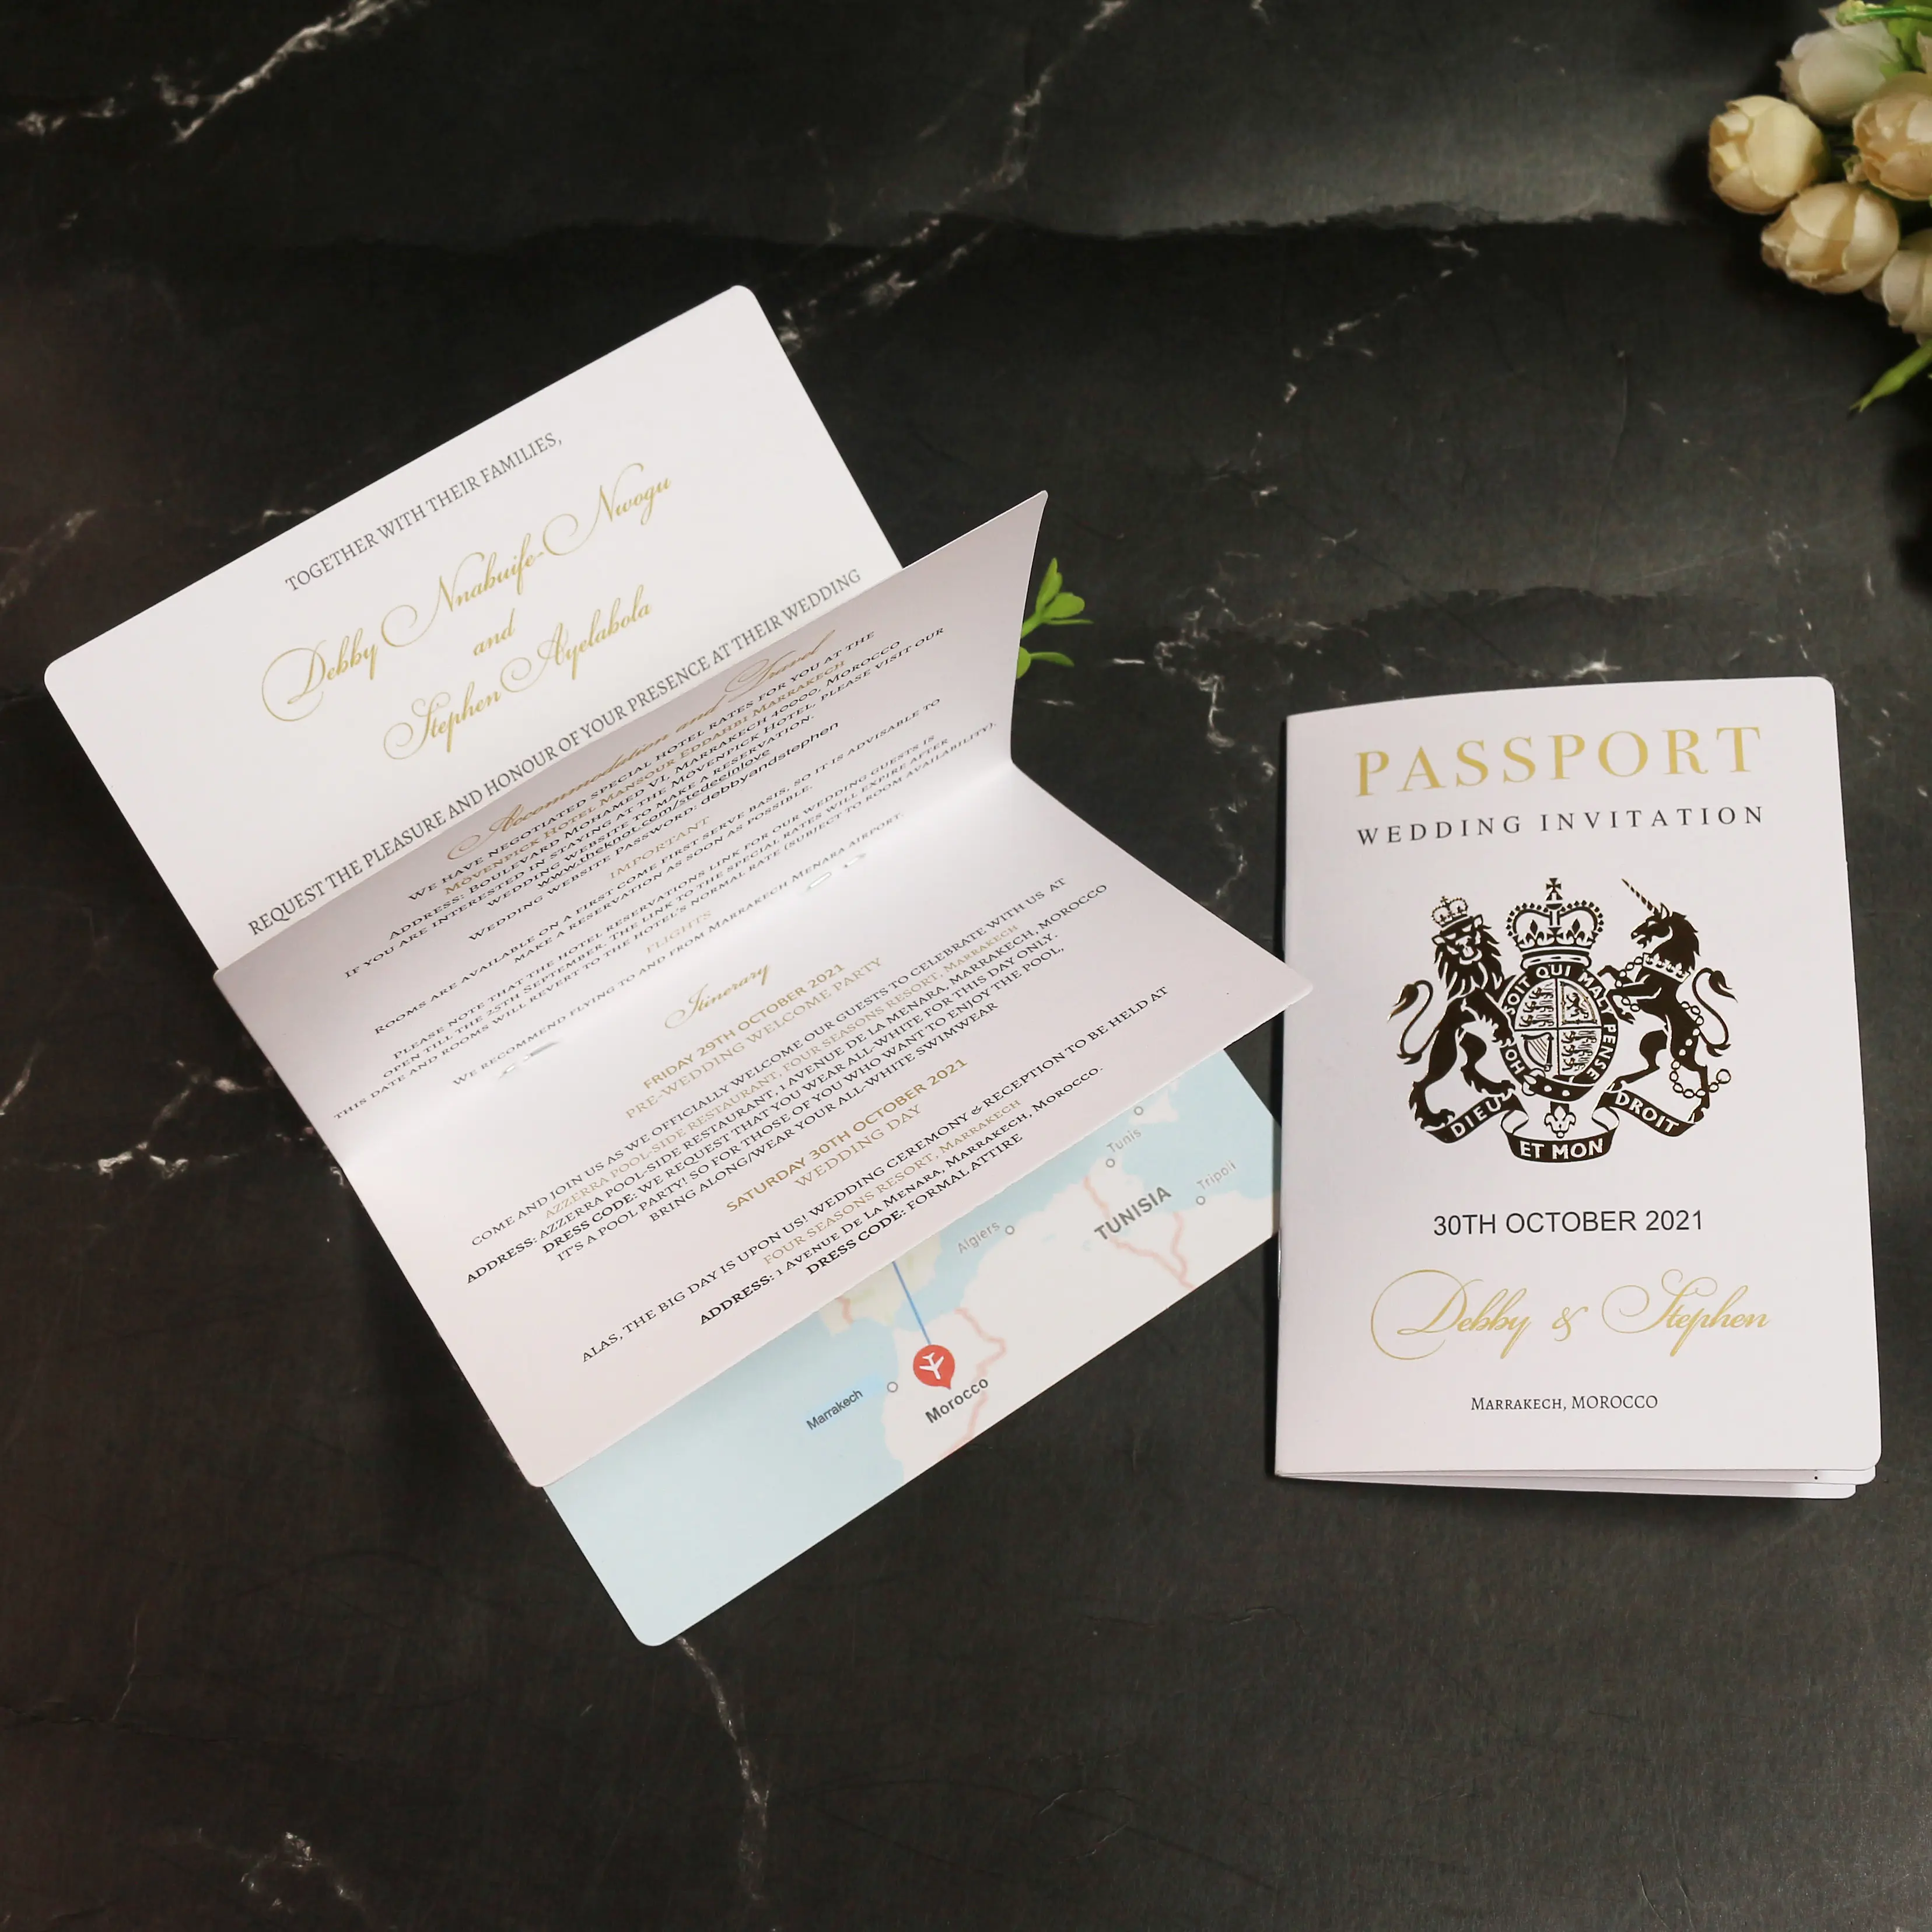 Specail Passport Wedding Invitation Printed With Photos